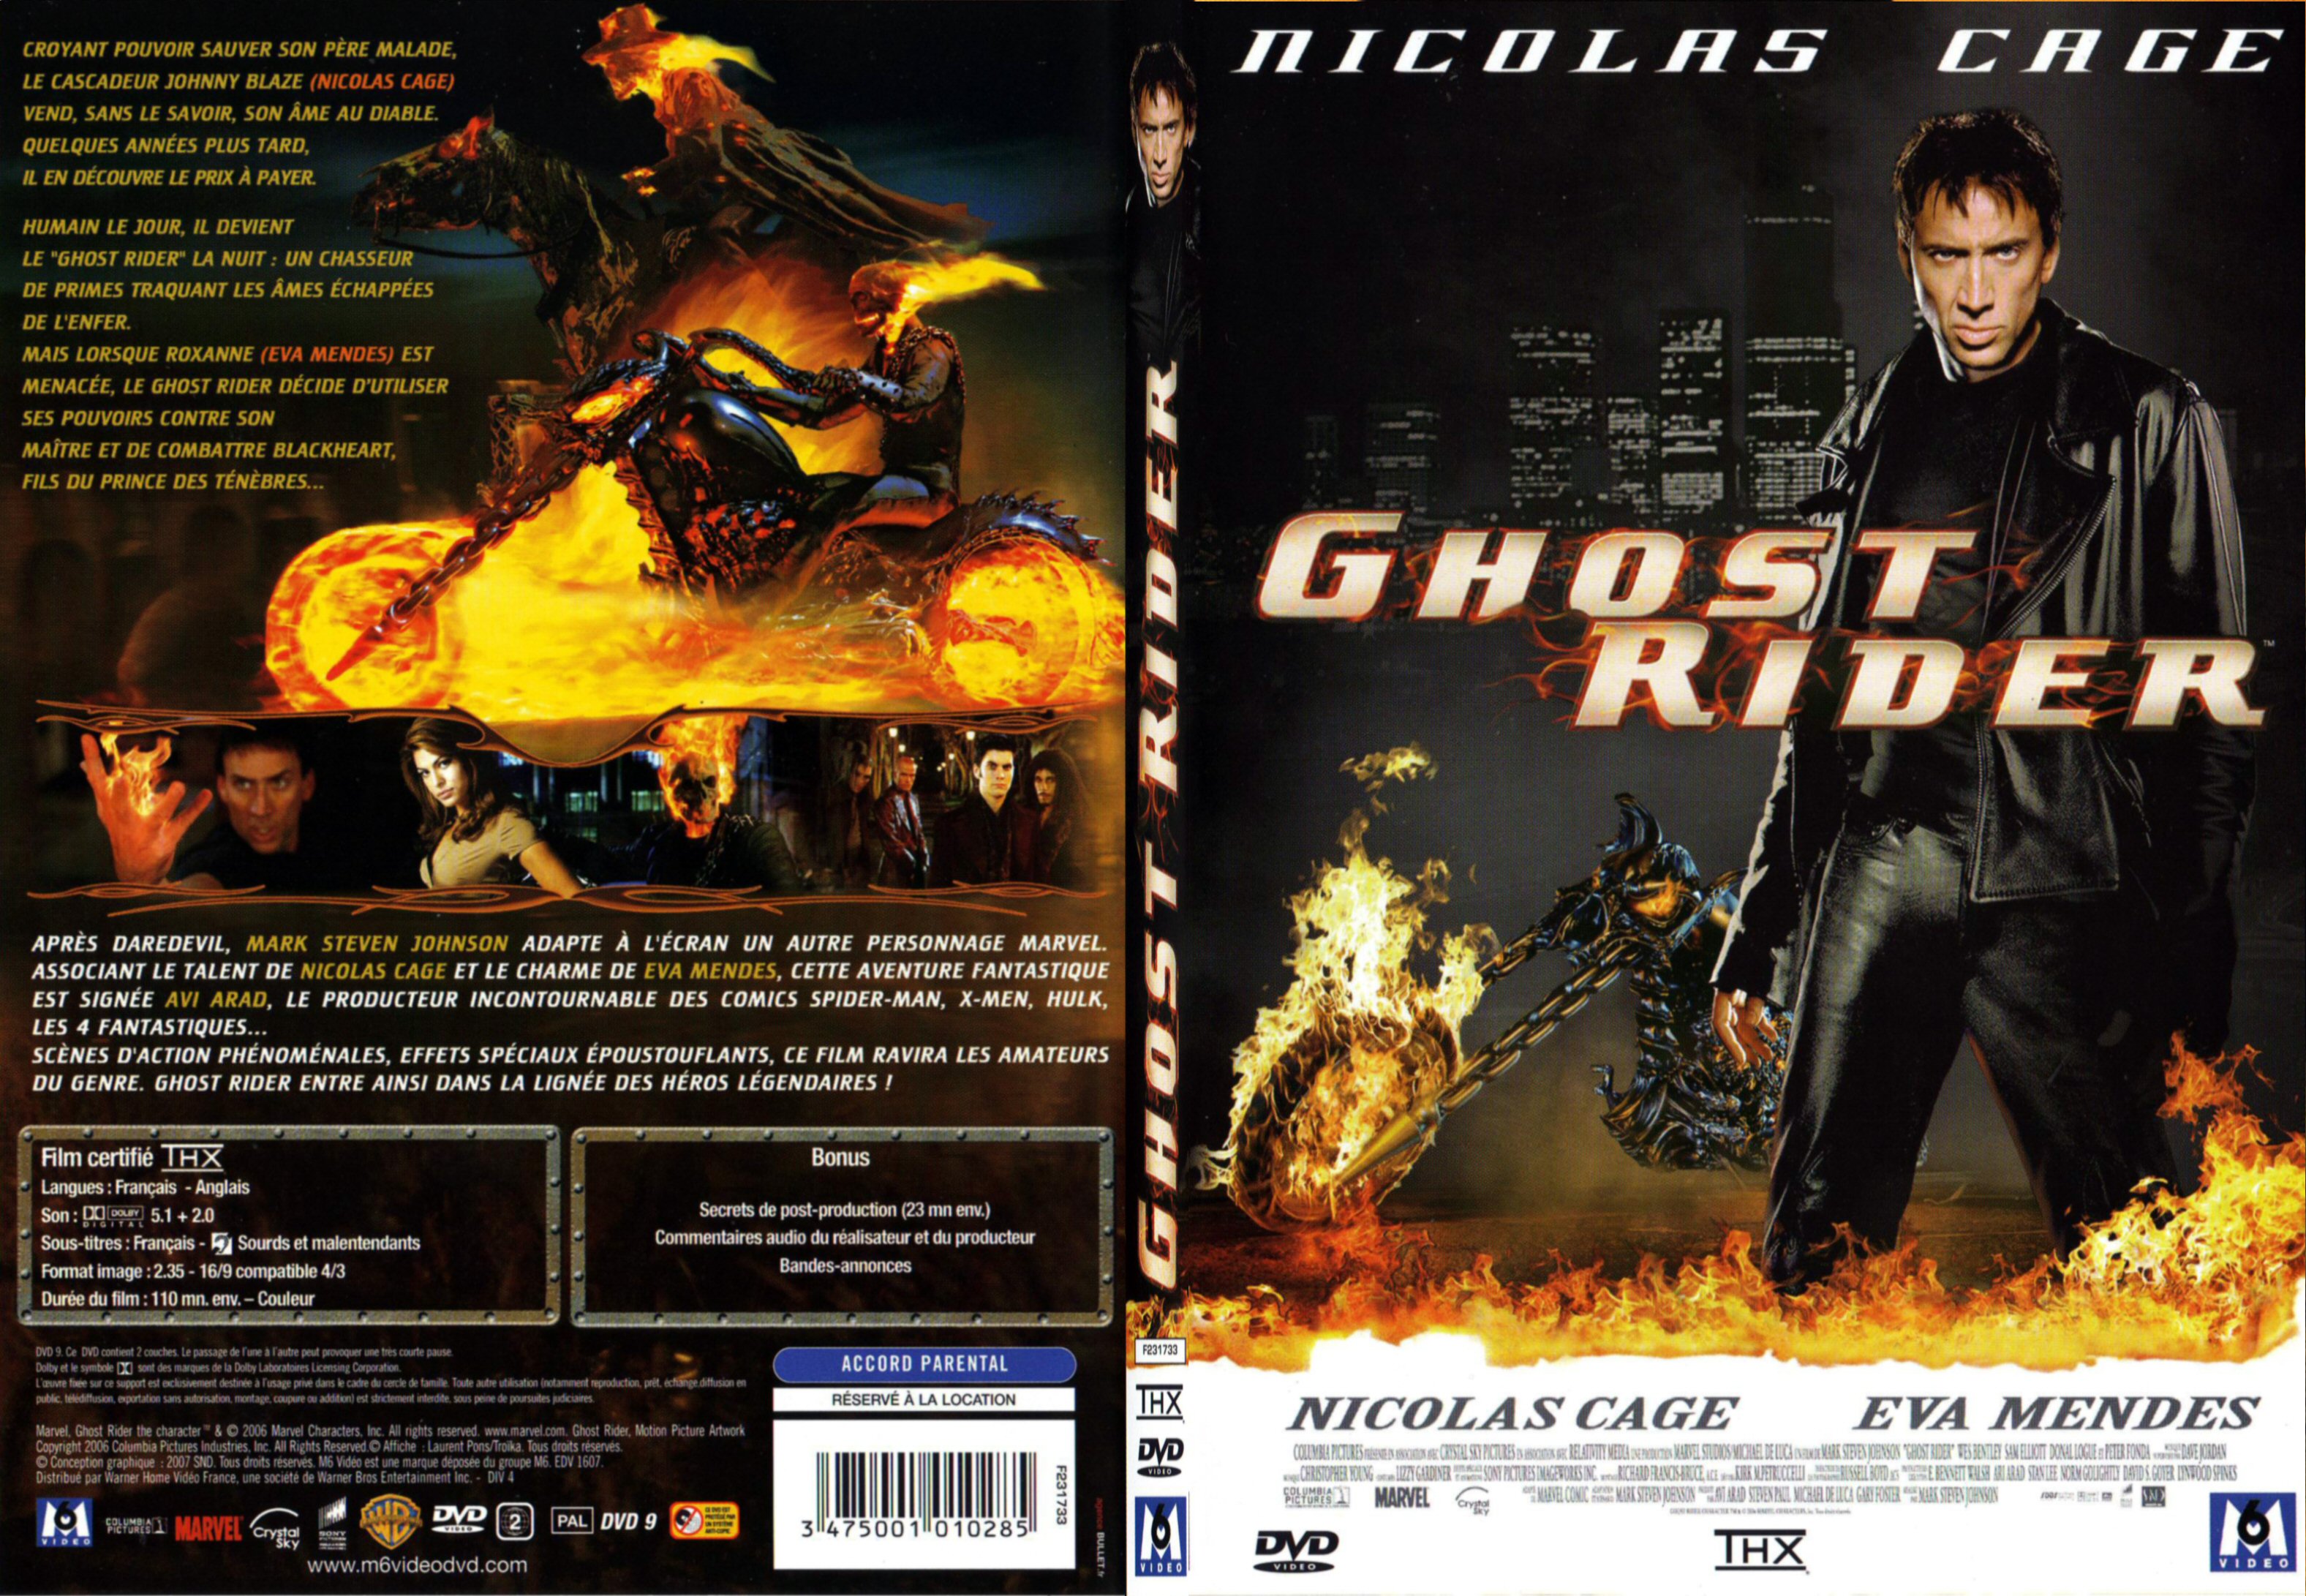 Jaquette DVD Ghost rider - SLIM